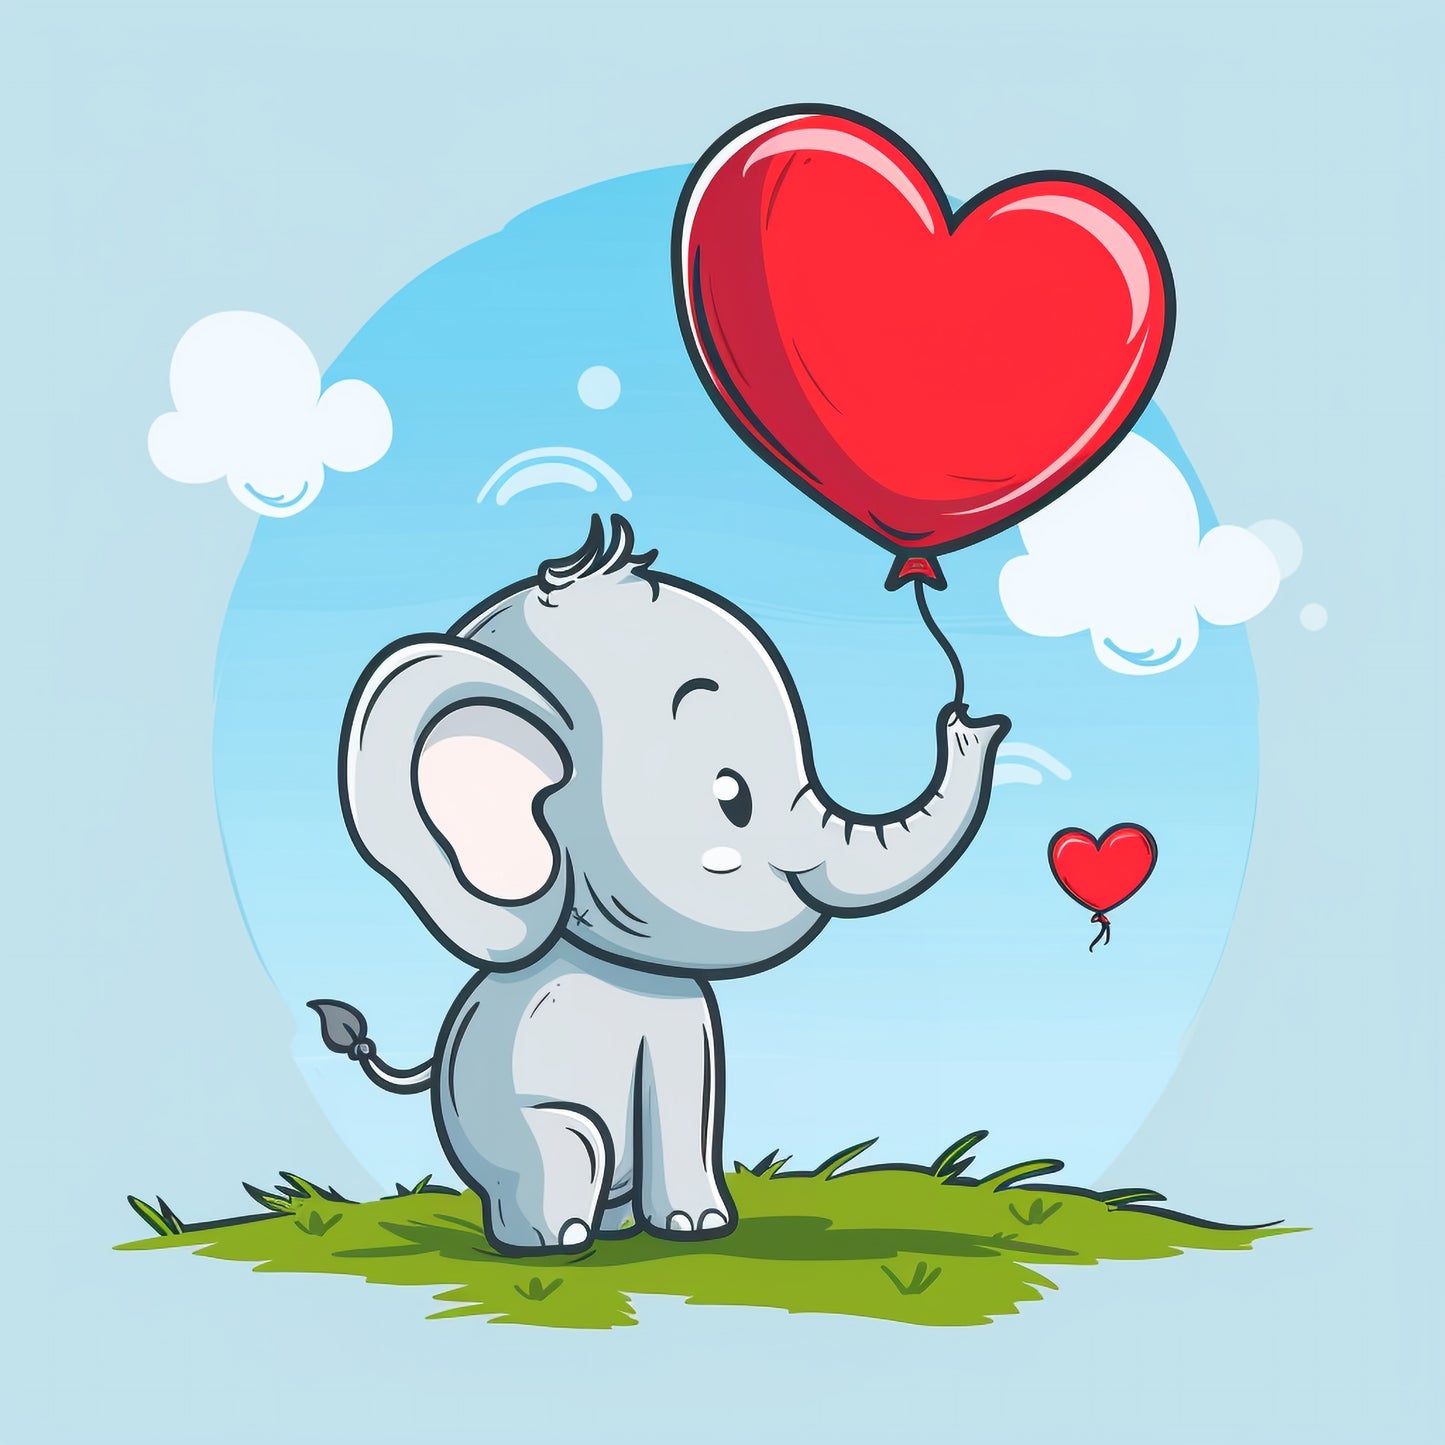 Adorable Cartoon Elephant Holding a Heart Balloon